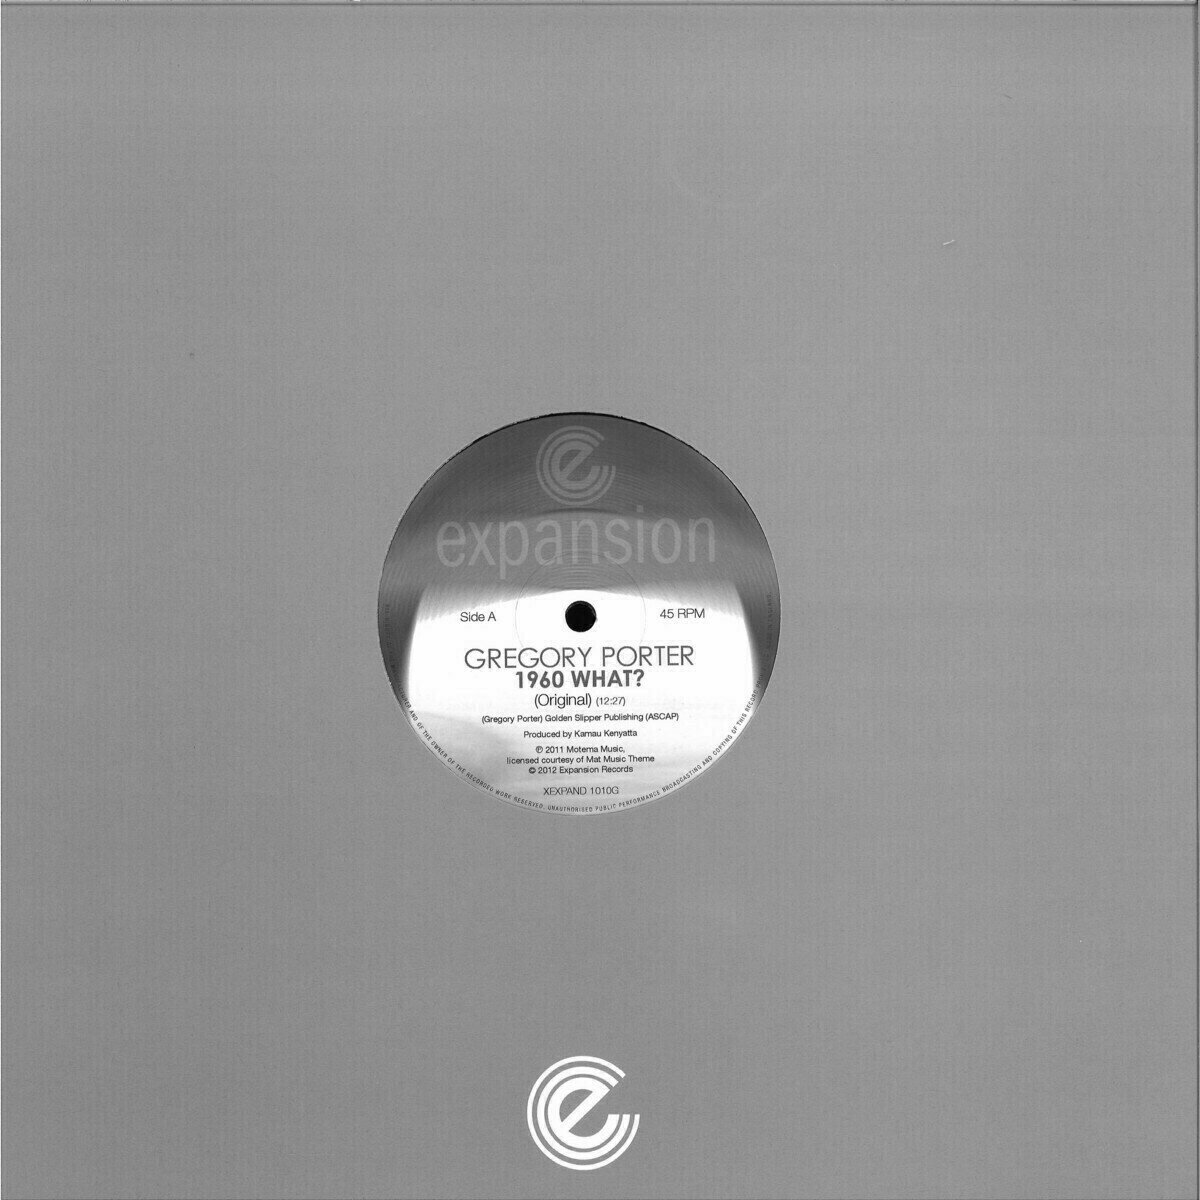 LP Gregory Porter - 1960 What? (Original Mix) (12" Vinyl)